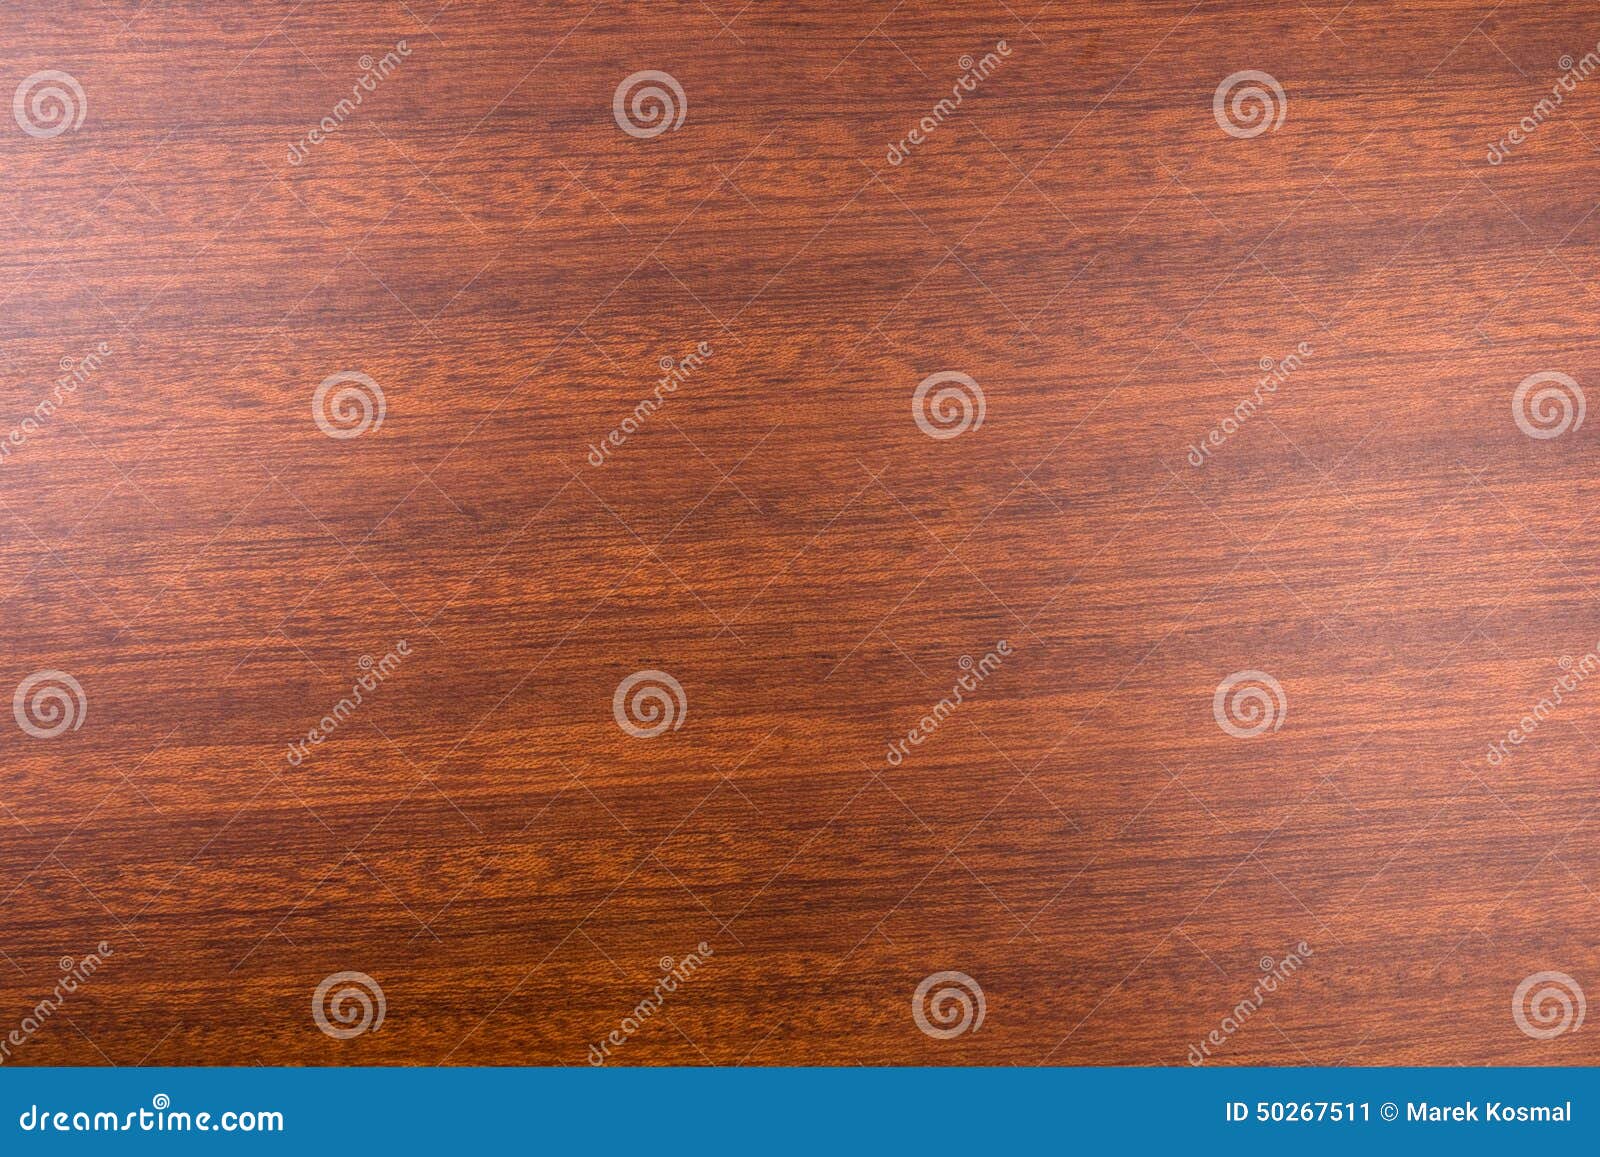 decorative mahogany wood background